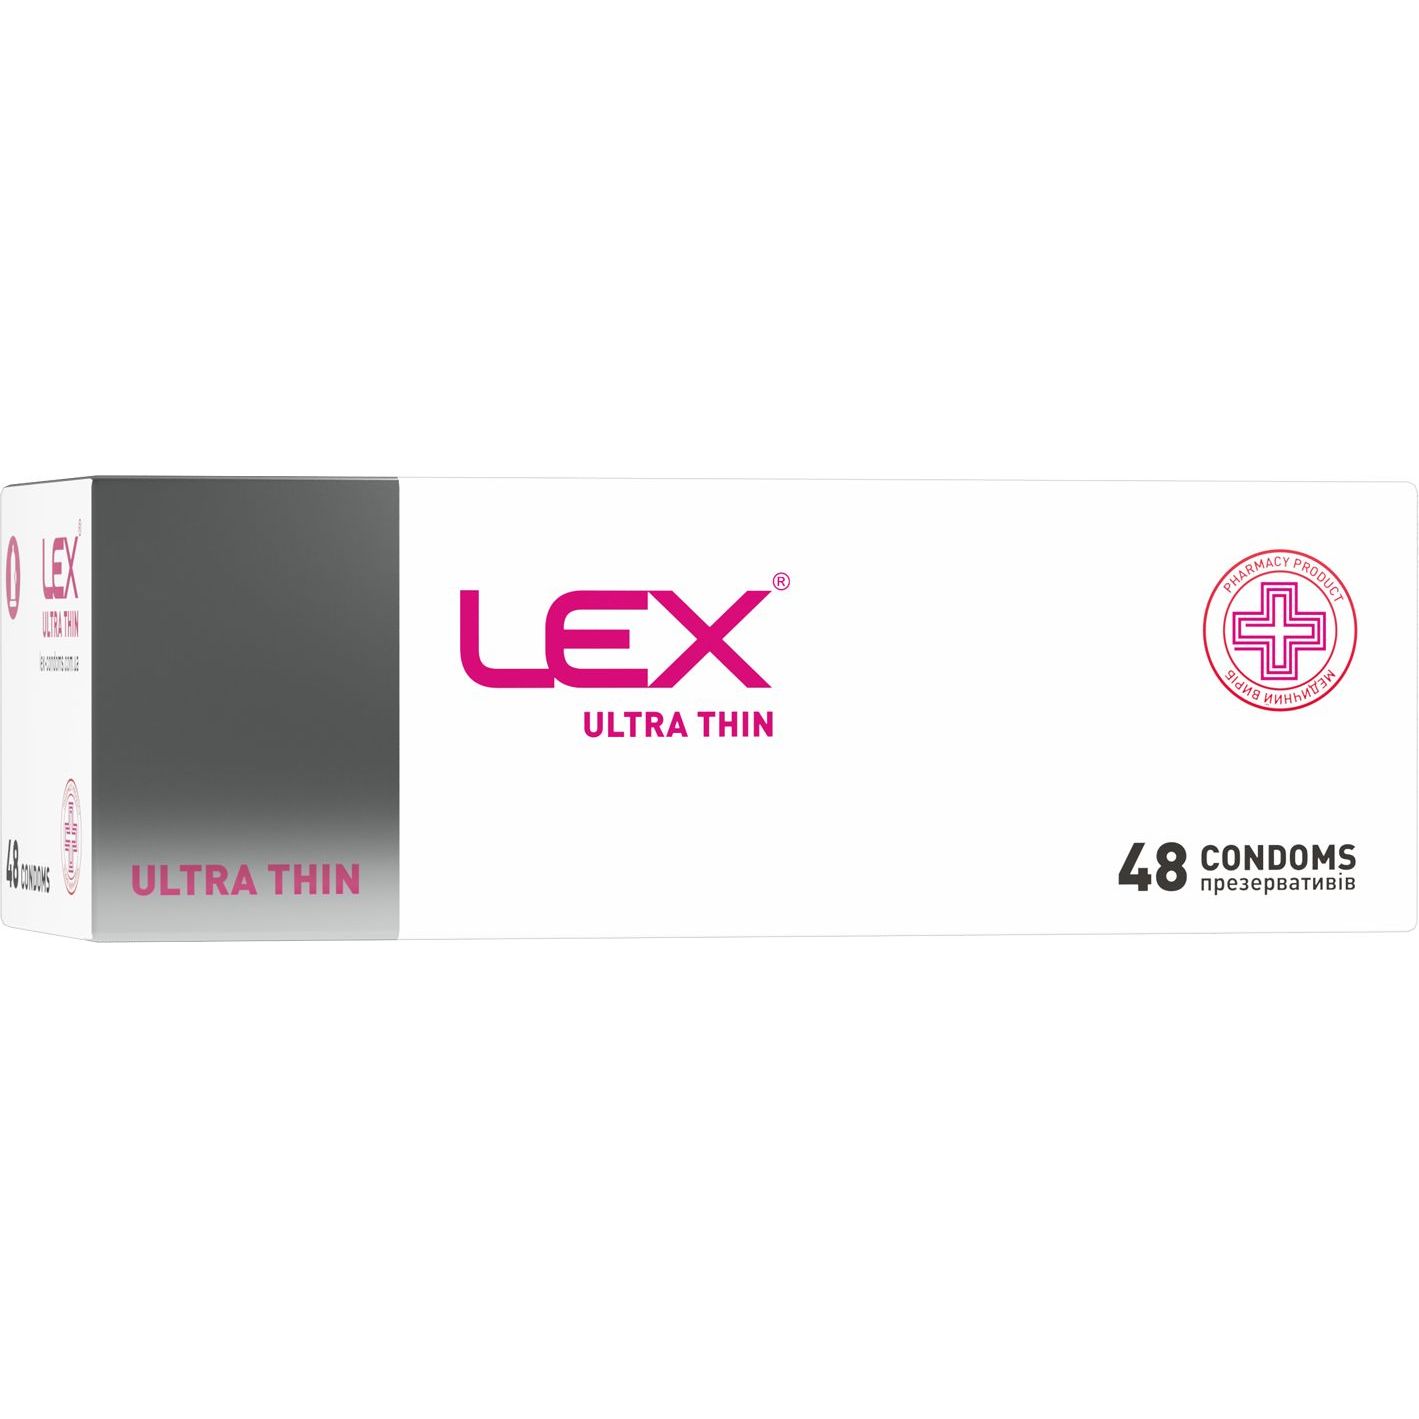 Презервативы Lex Ultra thin 48 шт. - фото 1